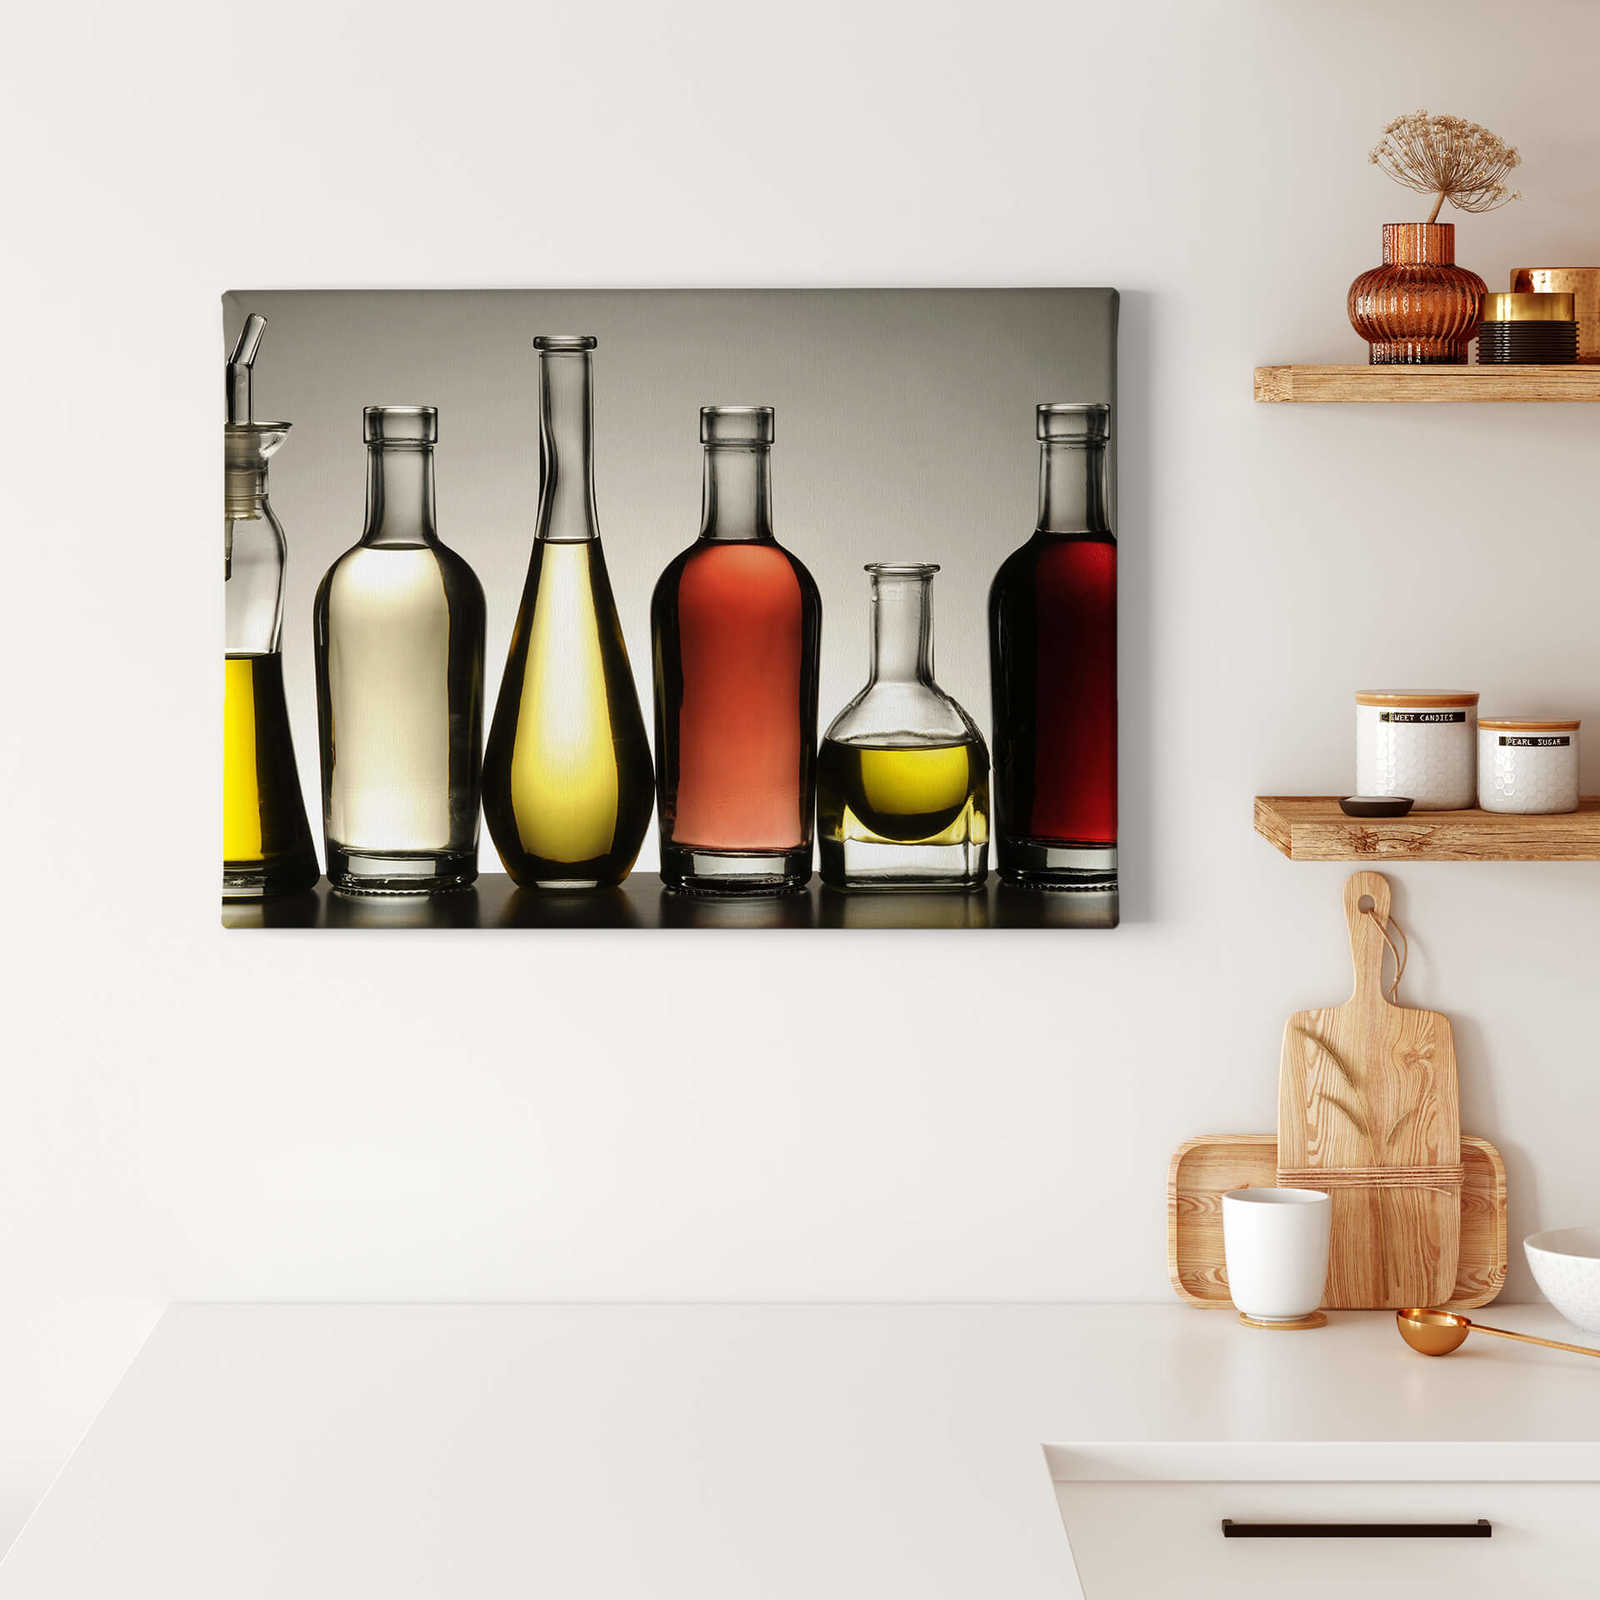             Kitchen canvas print bottles with oils
        